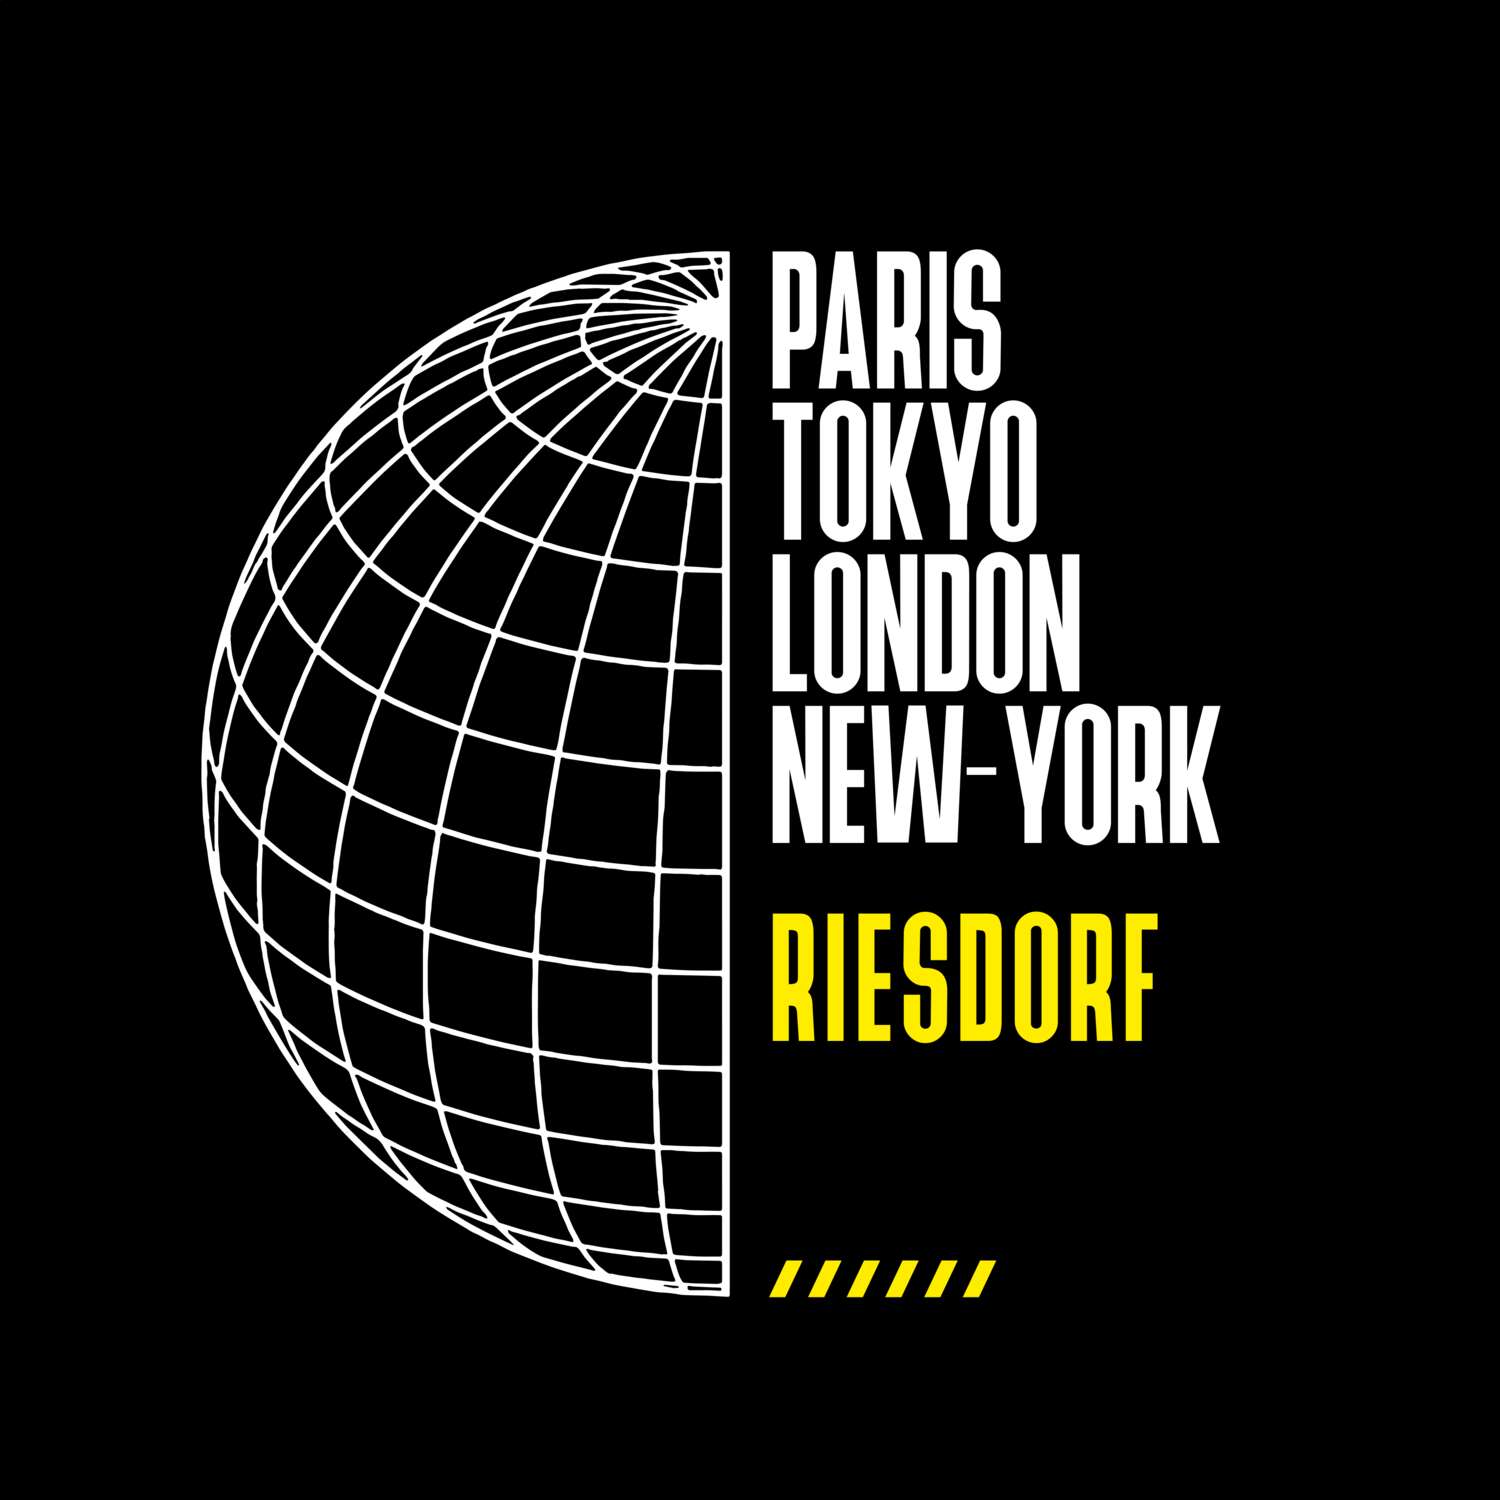 Riesdorf T-Shirt »Paris Tokyo London«